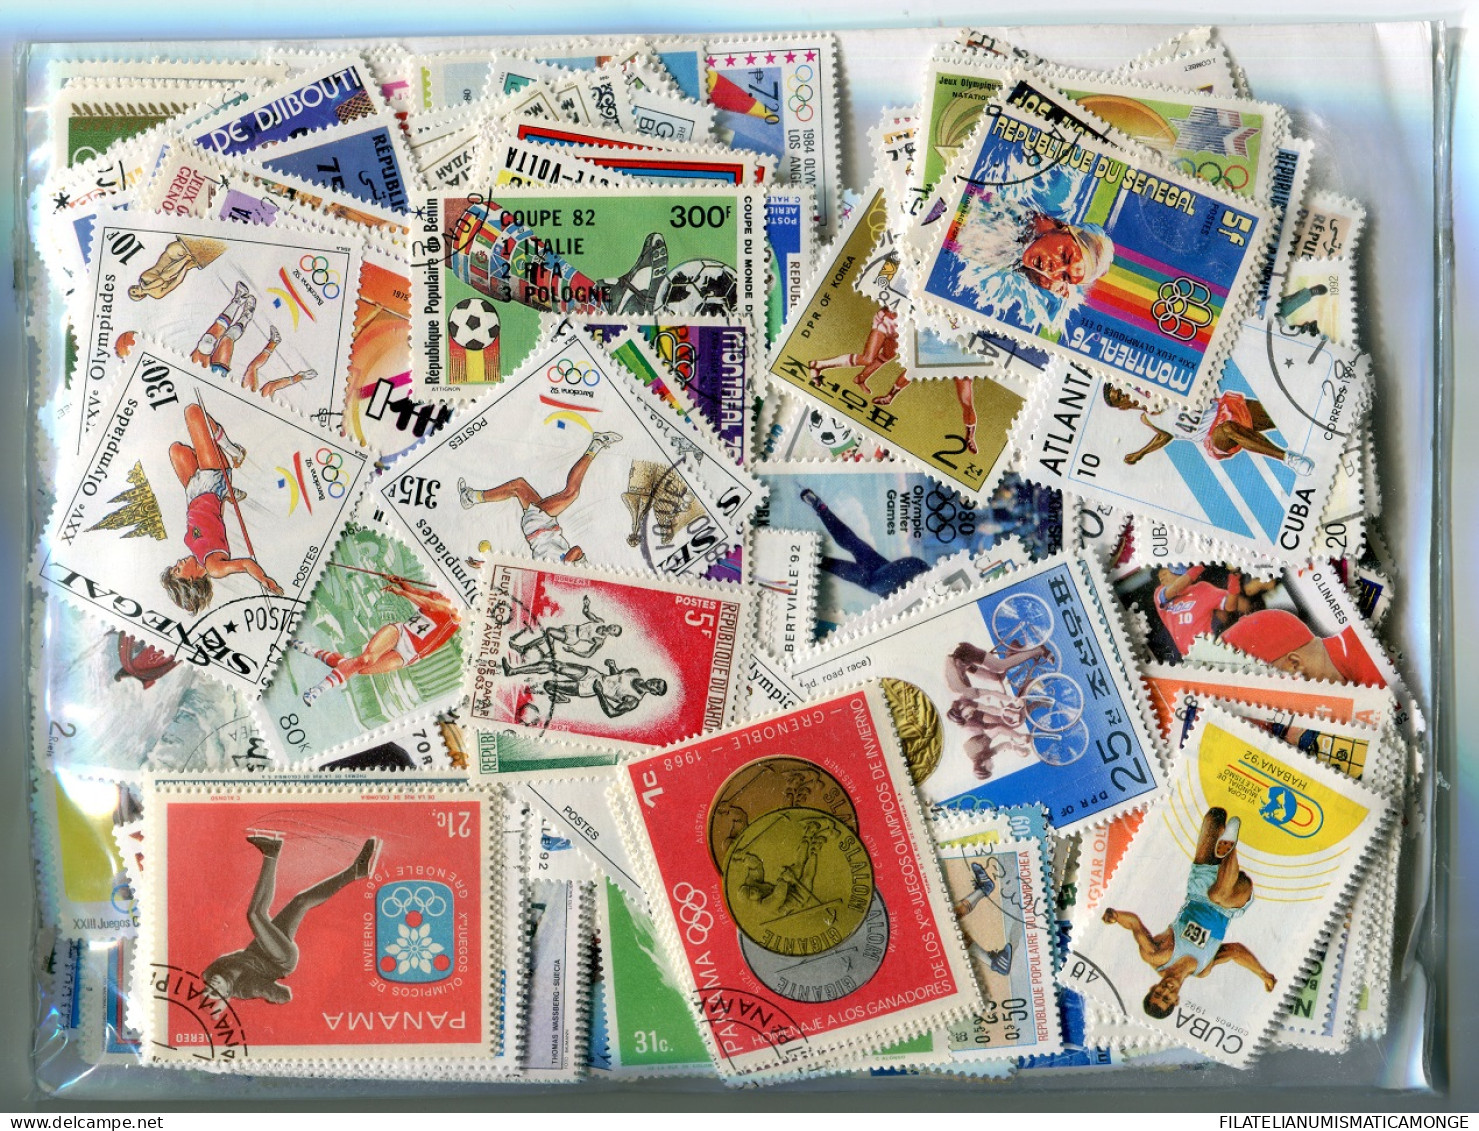  Offer - Lot Stamps - Paqueteria  Temáticas Varias 2000 Sellos Diferentes Depor - Alla Rinfusa (min 1000 Francobolli)